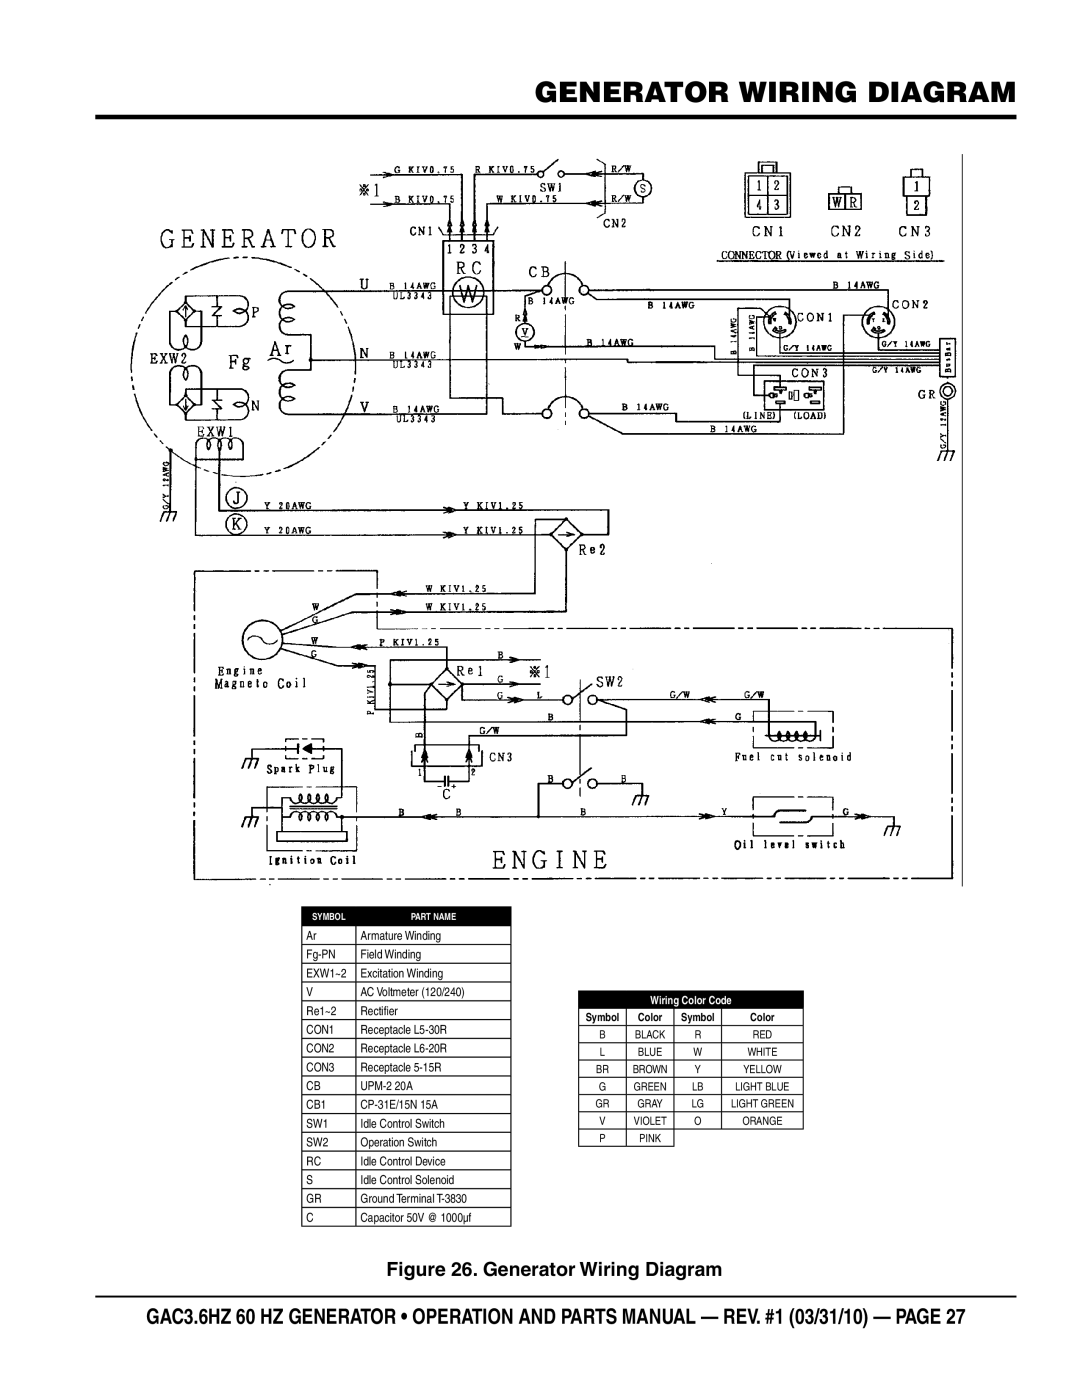 Multiquip GAC3.6HZ manual Generator wiring diagram, SW2 